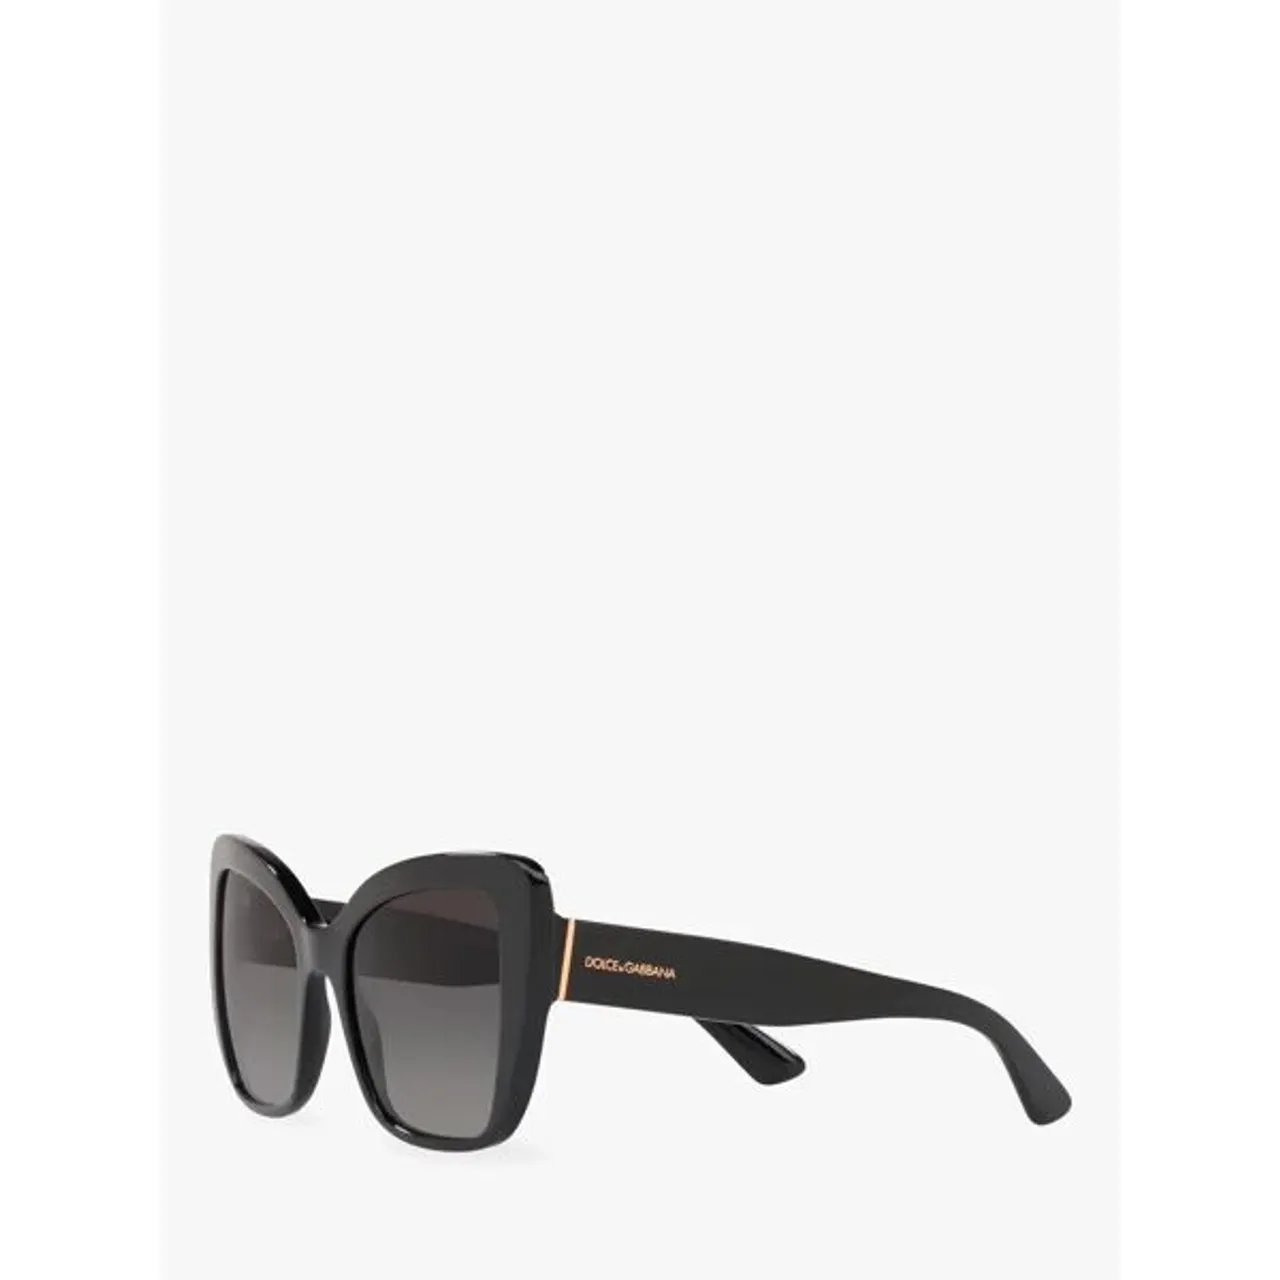 Dolce & Gabbana DG4348 Women's Cat's Eye Sunglasses - Black/Grey Gradient - Female